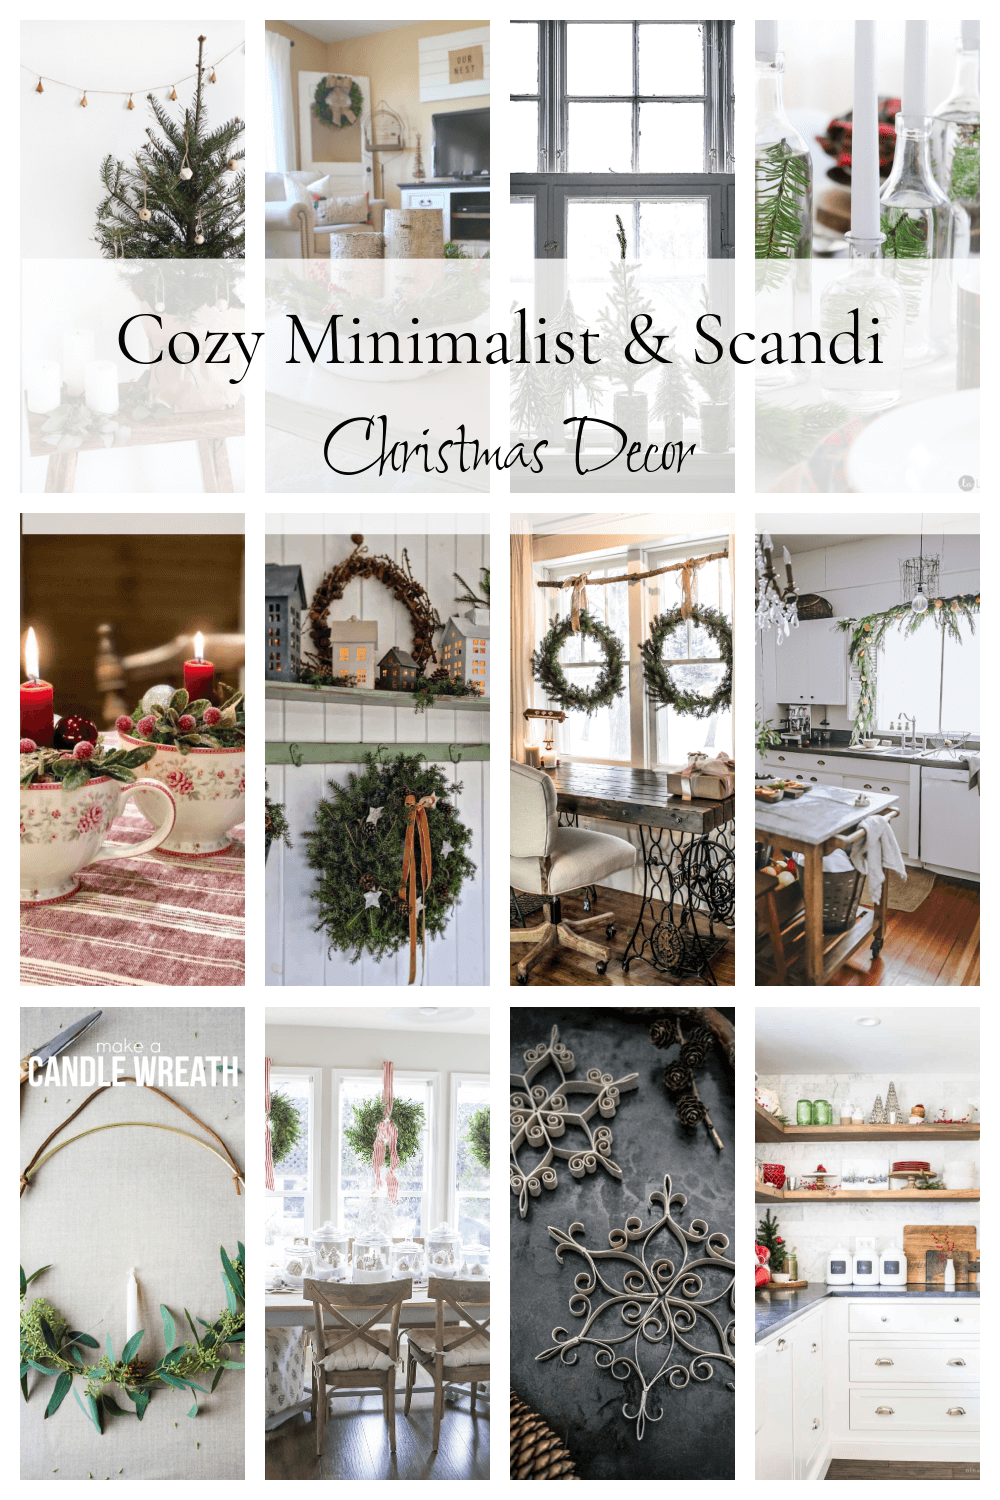 Cozy Minimalist & Scandi Christmas Decor